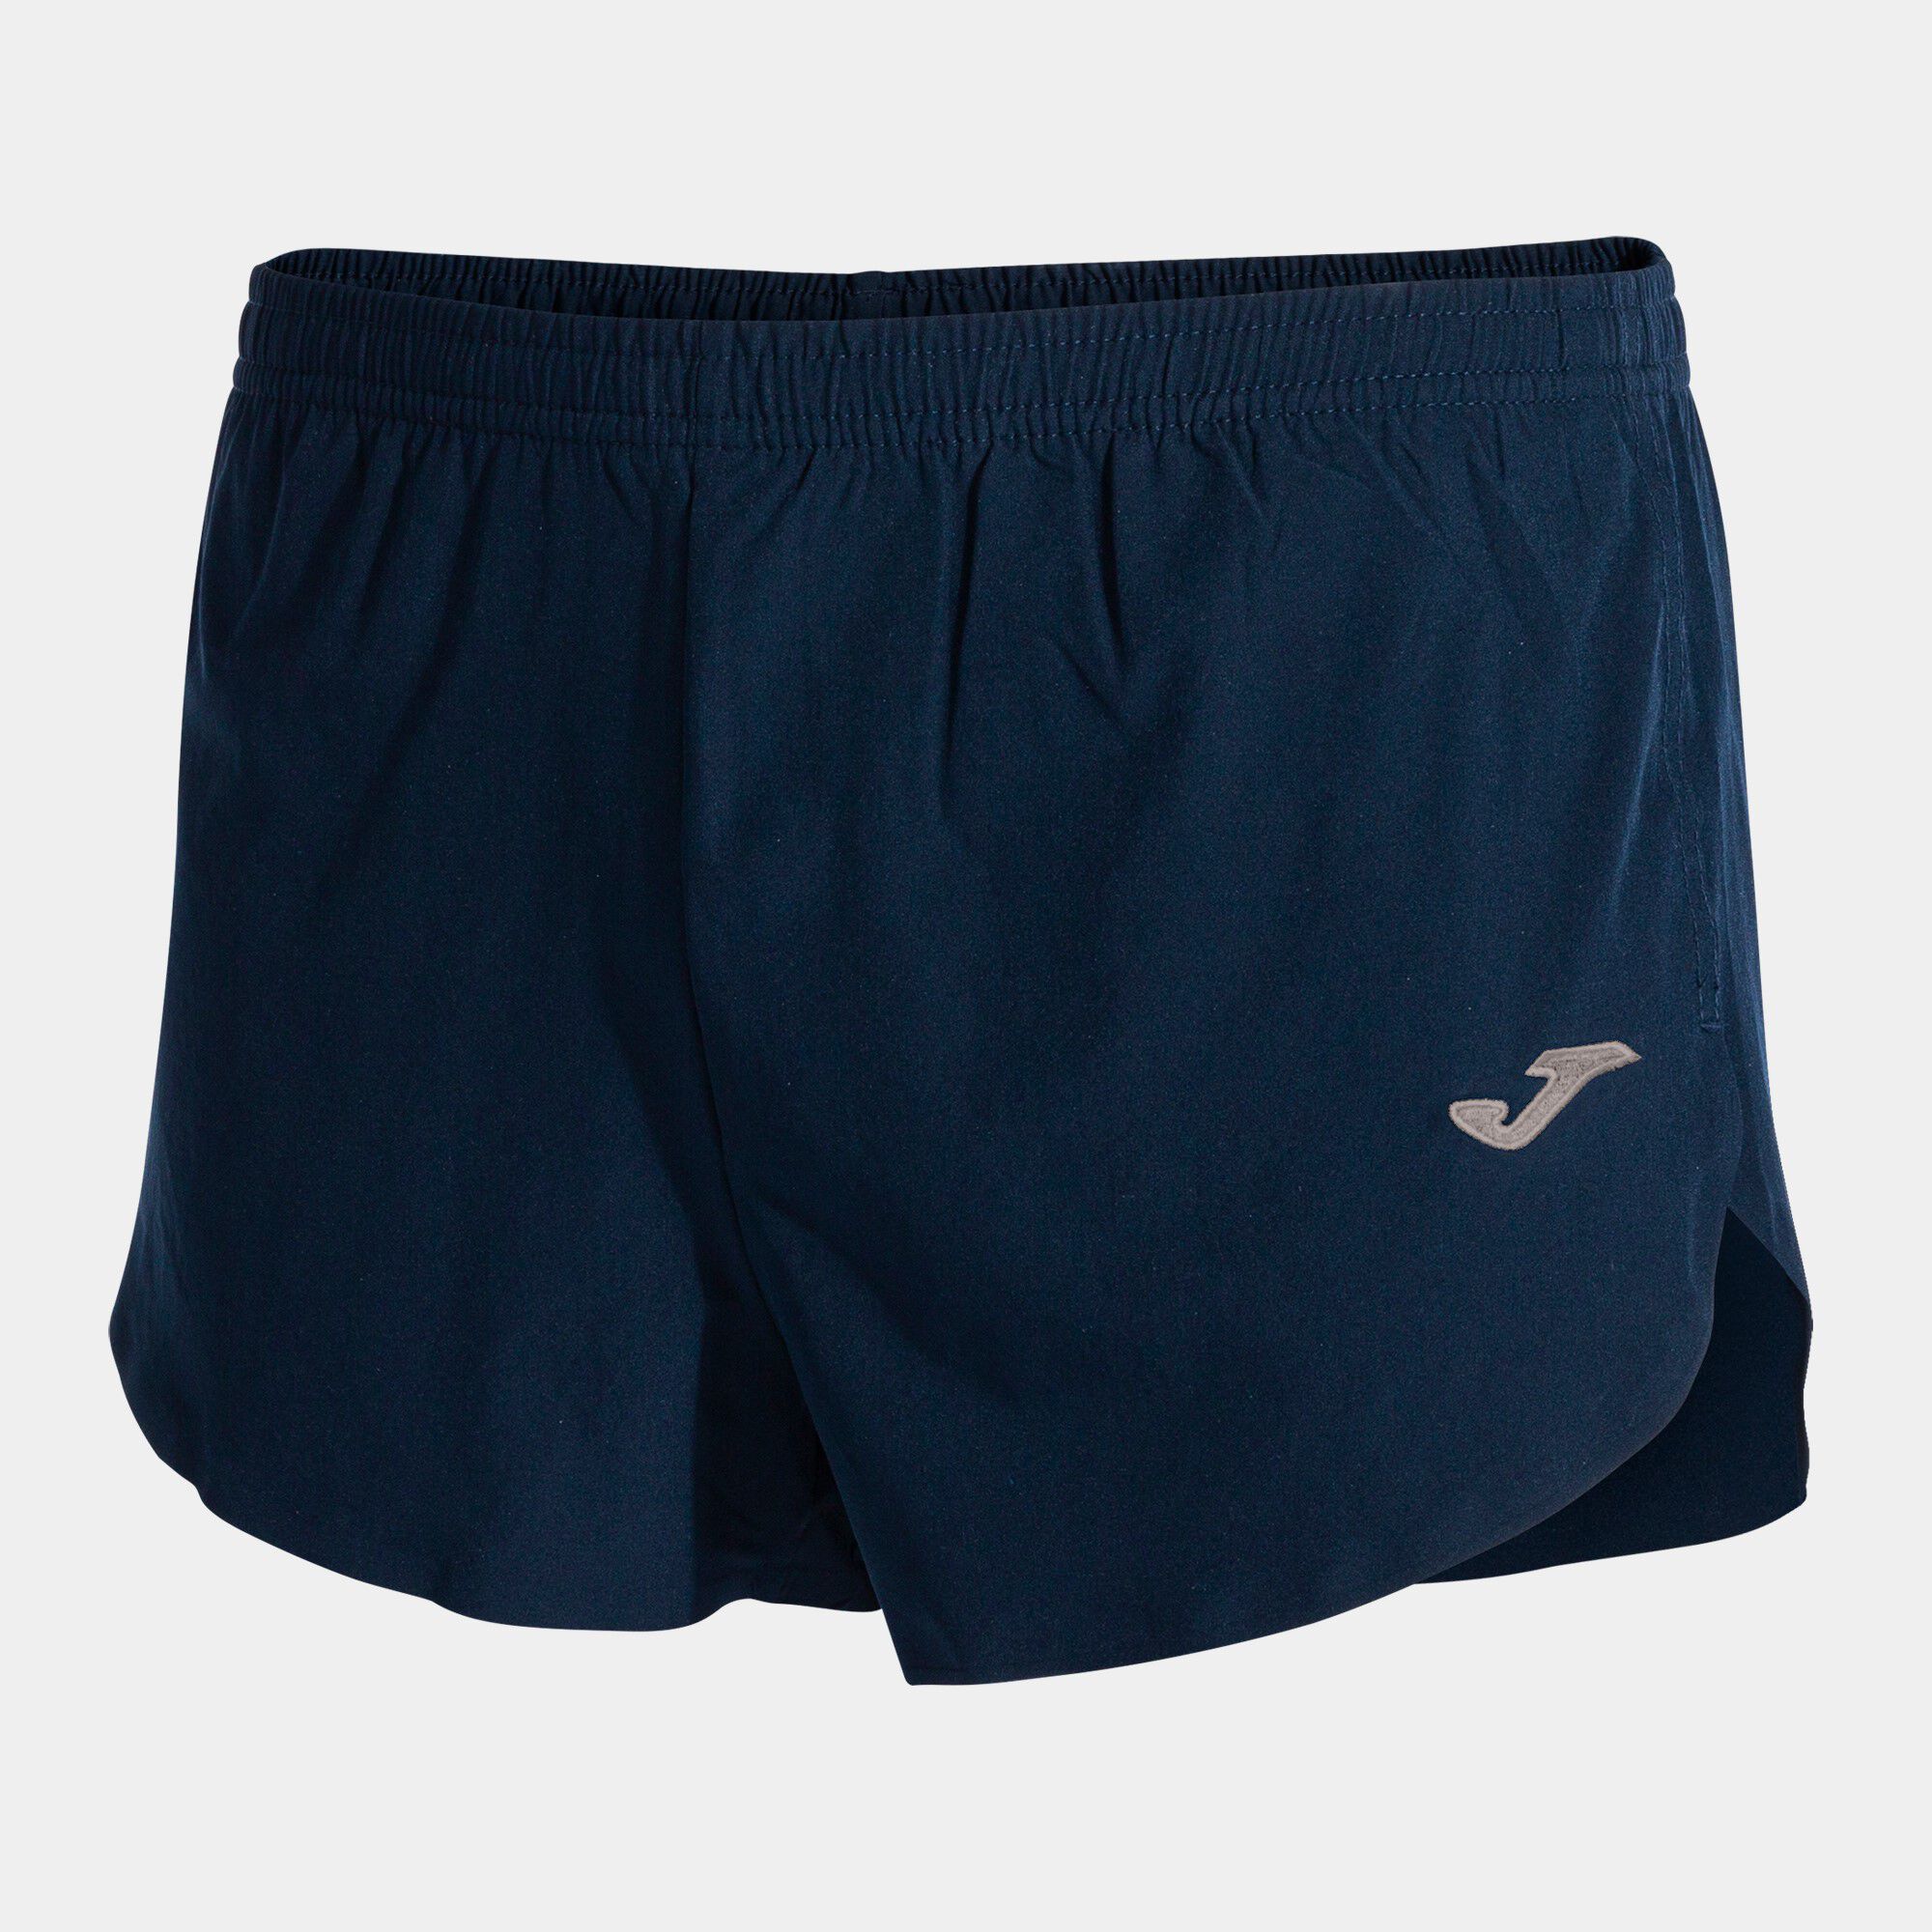 Shorts man Olimpia navy blue